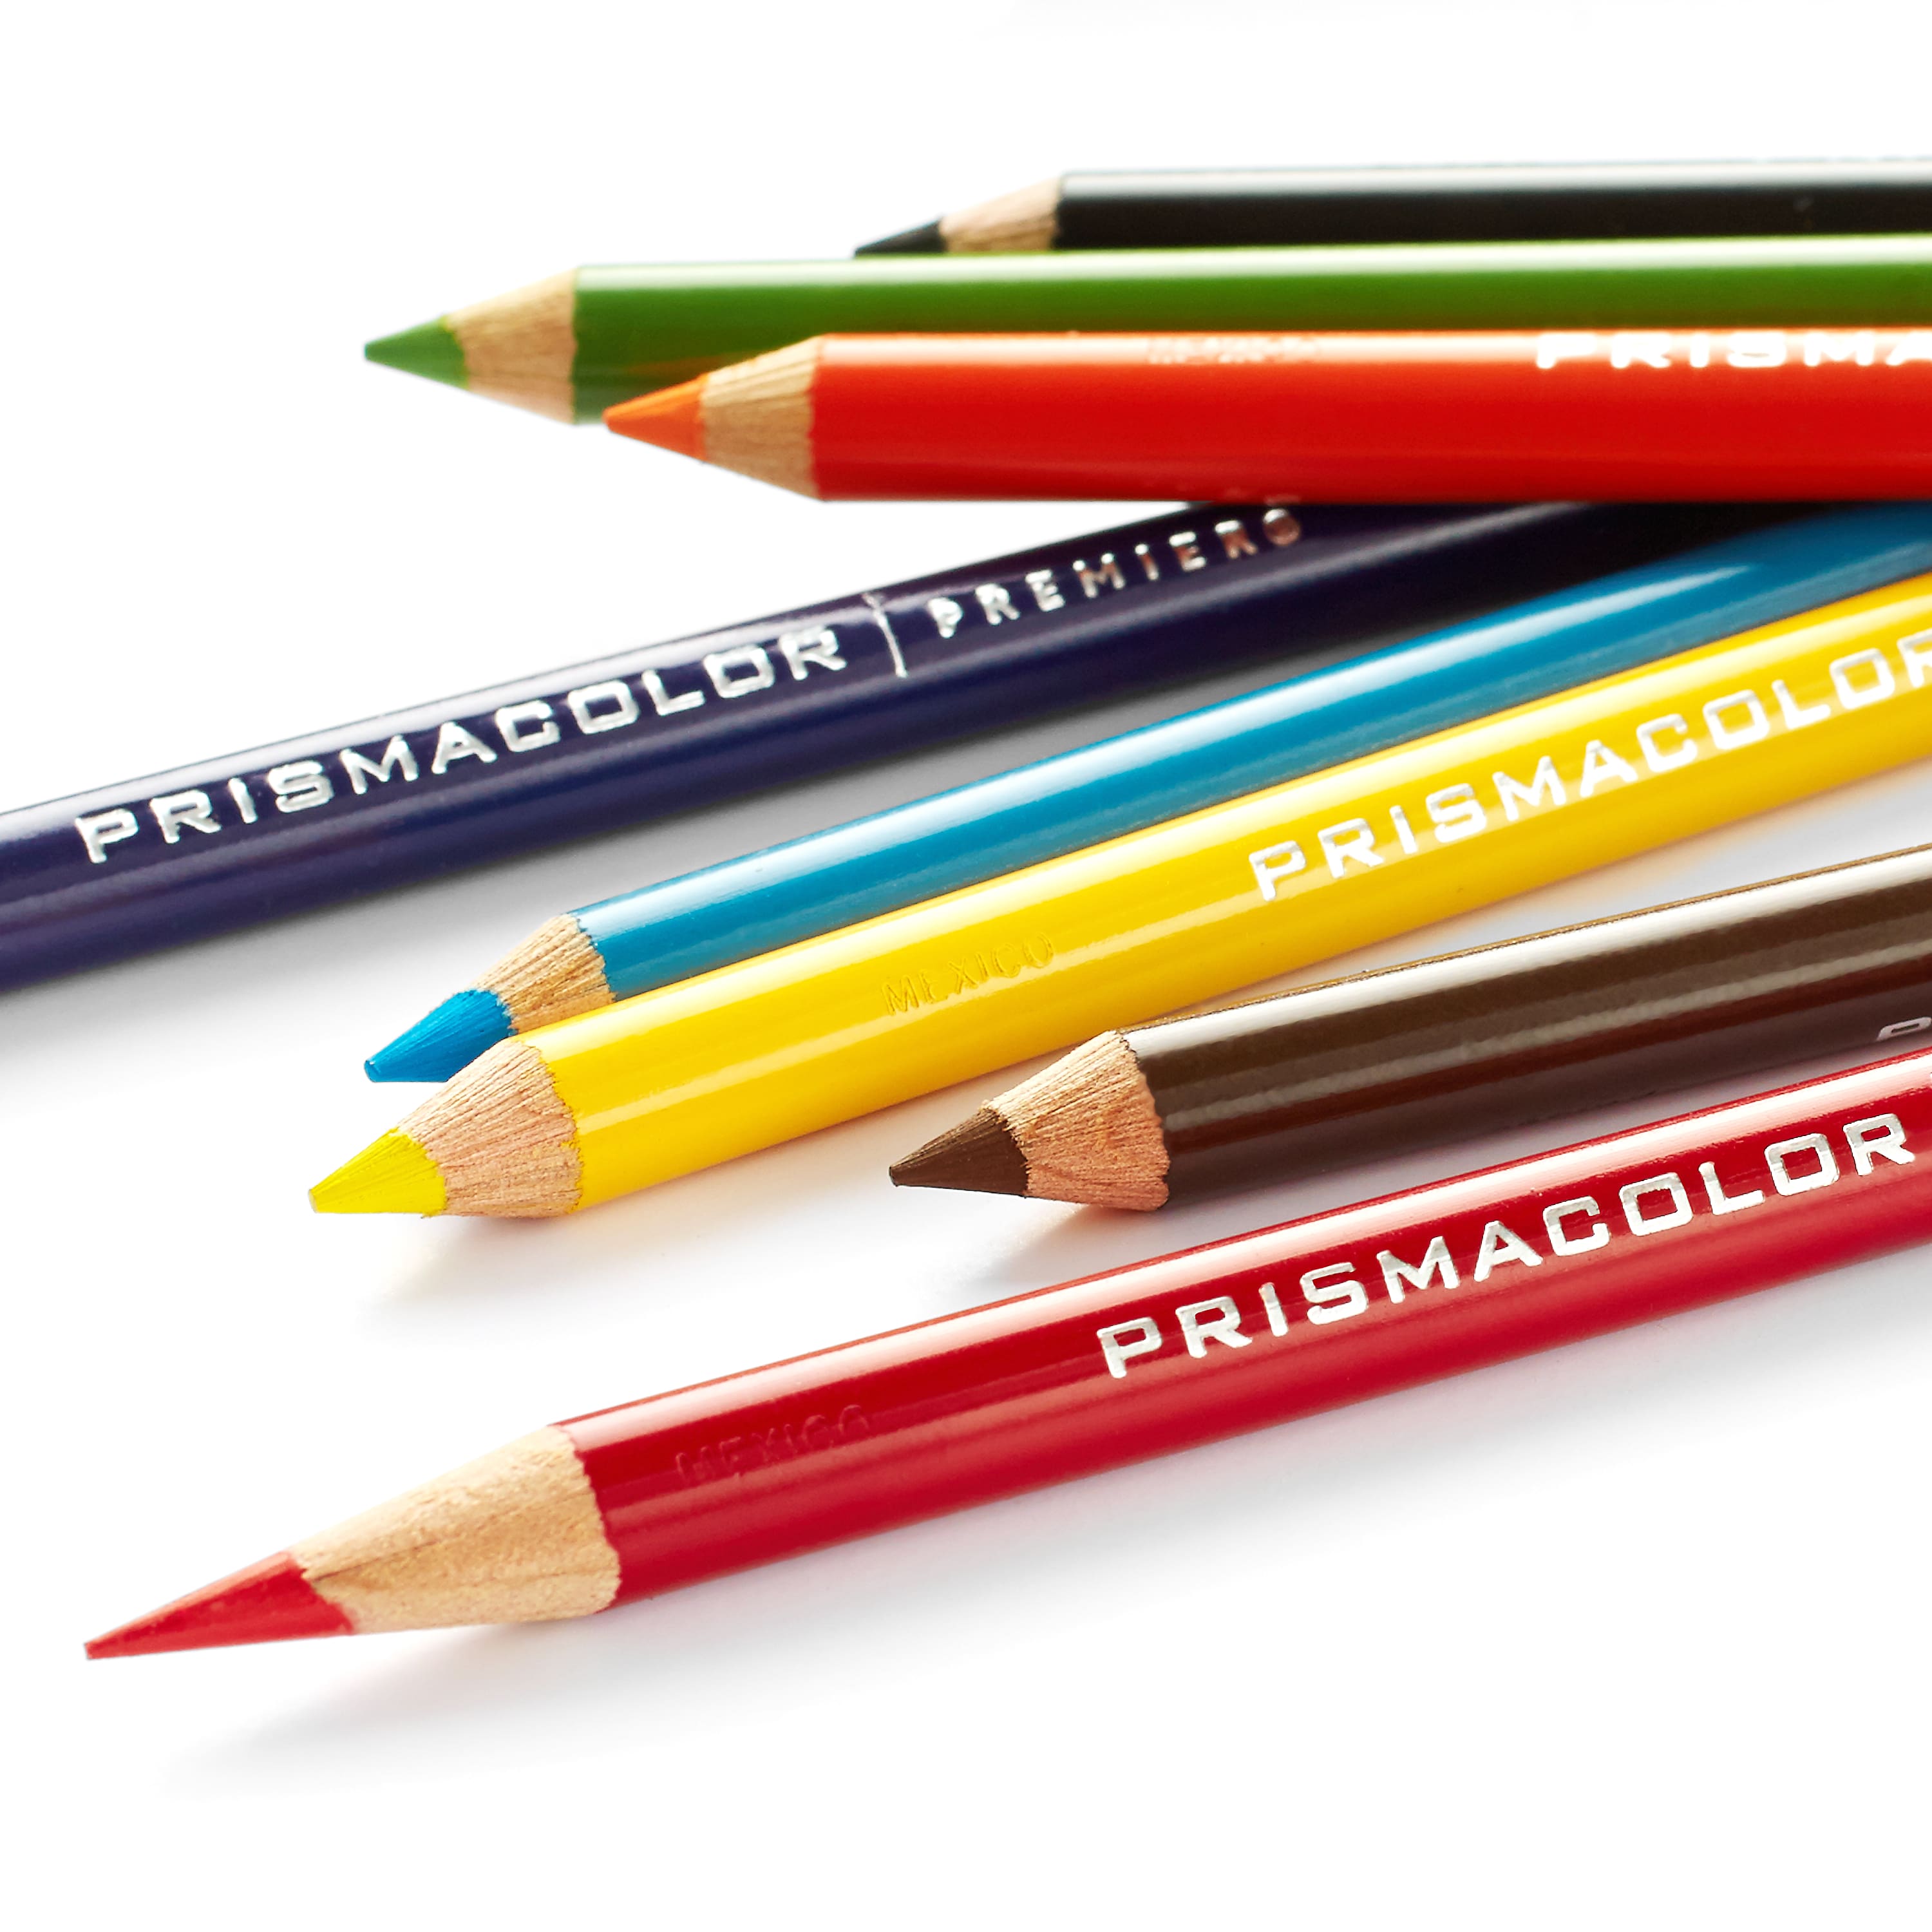 Colored Pencils (36Ct), Kids Pencil Set, Back to School Supplies